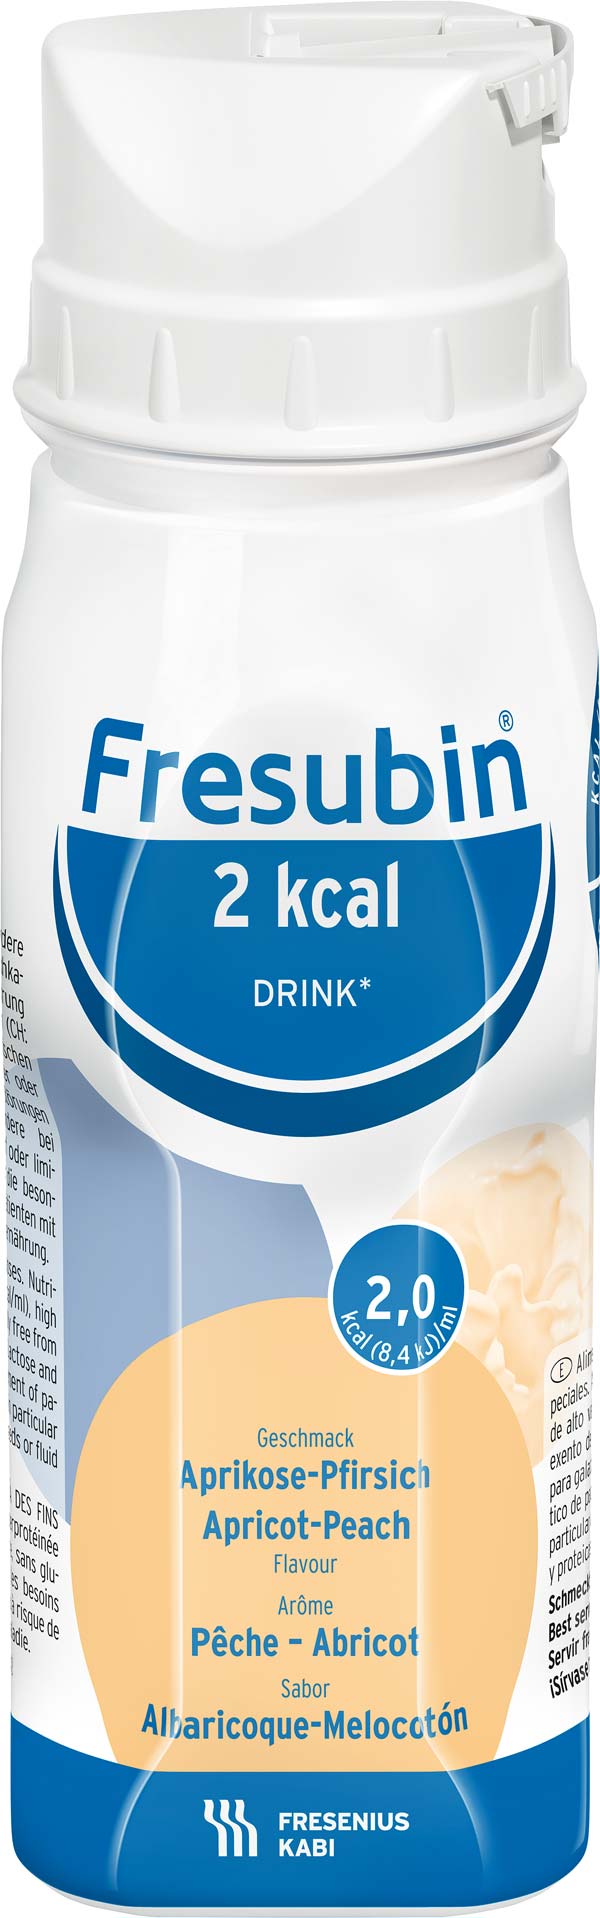 Fresubin 2kcal Drink Aprikose-Pfirsich 24x200ml Trinknahrung - so schmeckt Lebensqualität